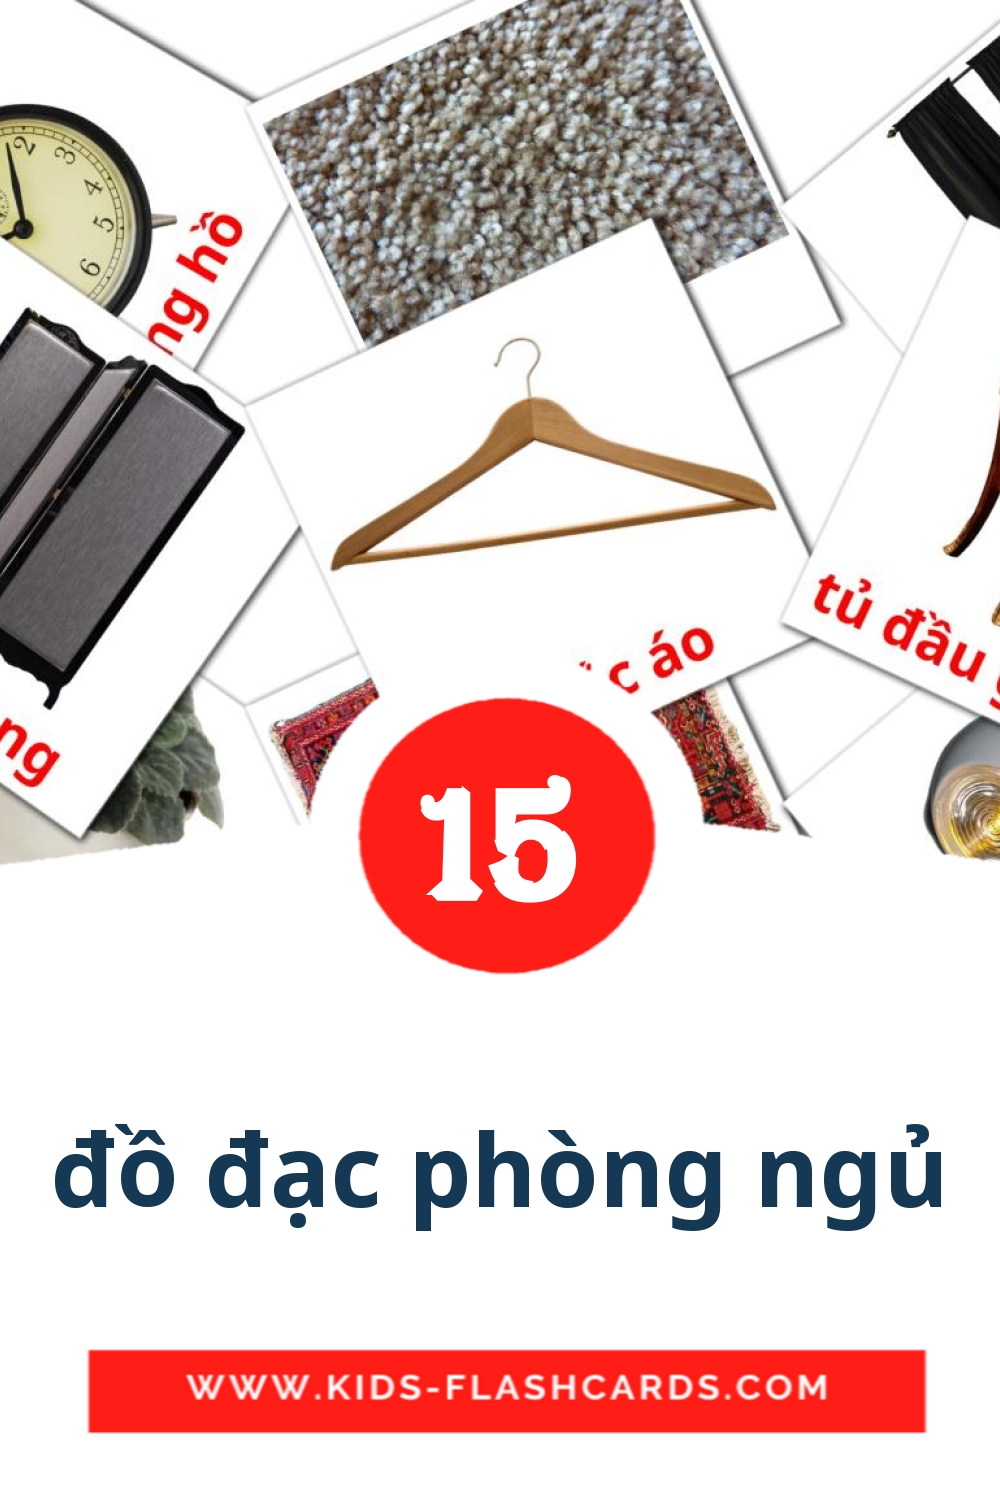 15 tarjetas didacticas de đồ đạc phòng ngủ para el jardín de infancia en vietnamita